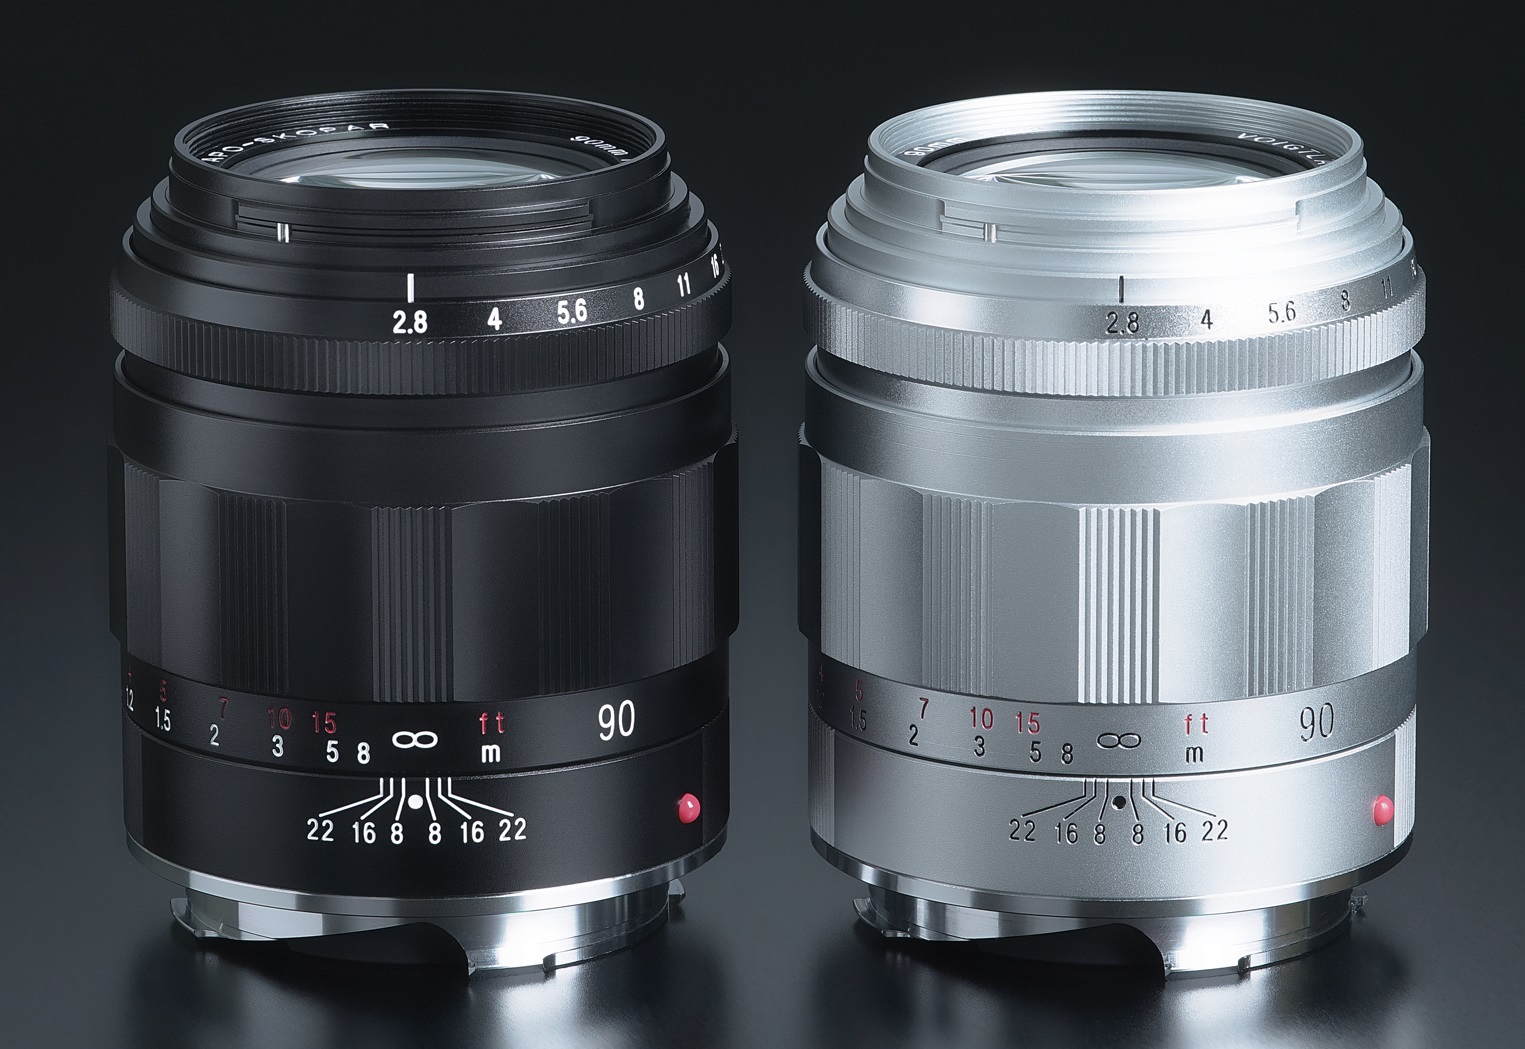 The rumored Voigtlander APO-SKOPAR 90mm f/2.8 lens will be available